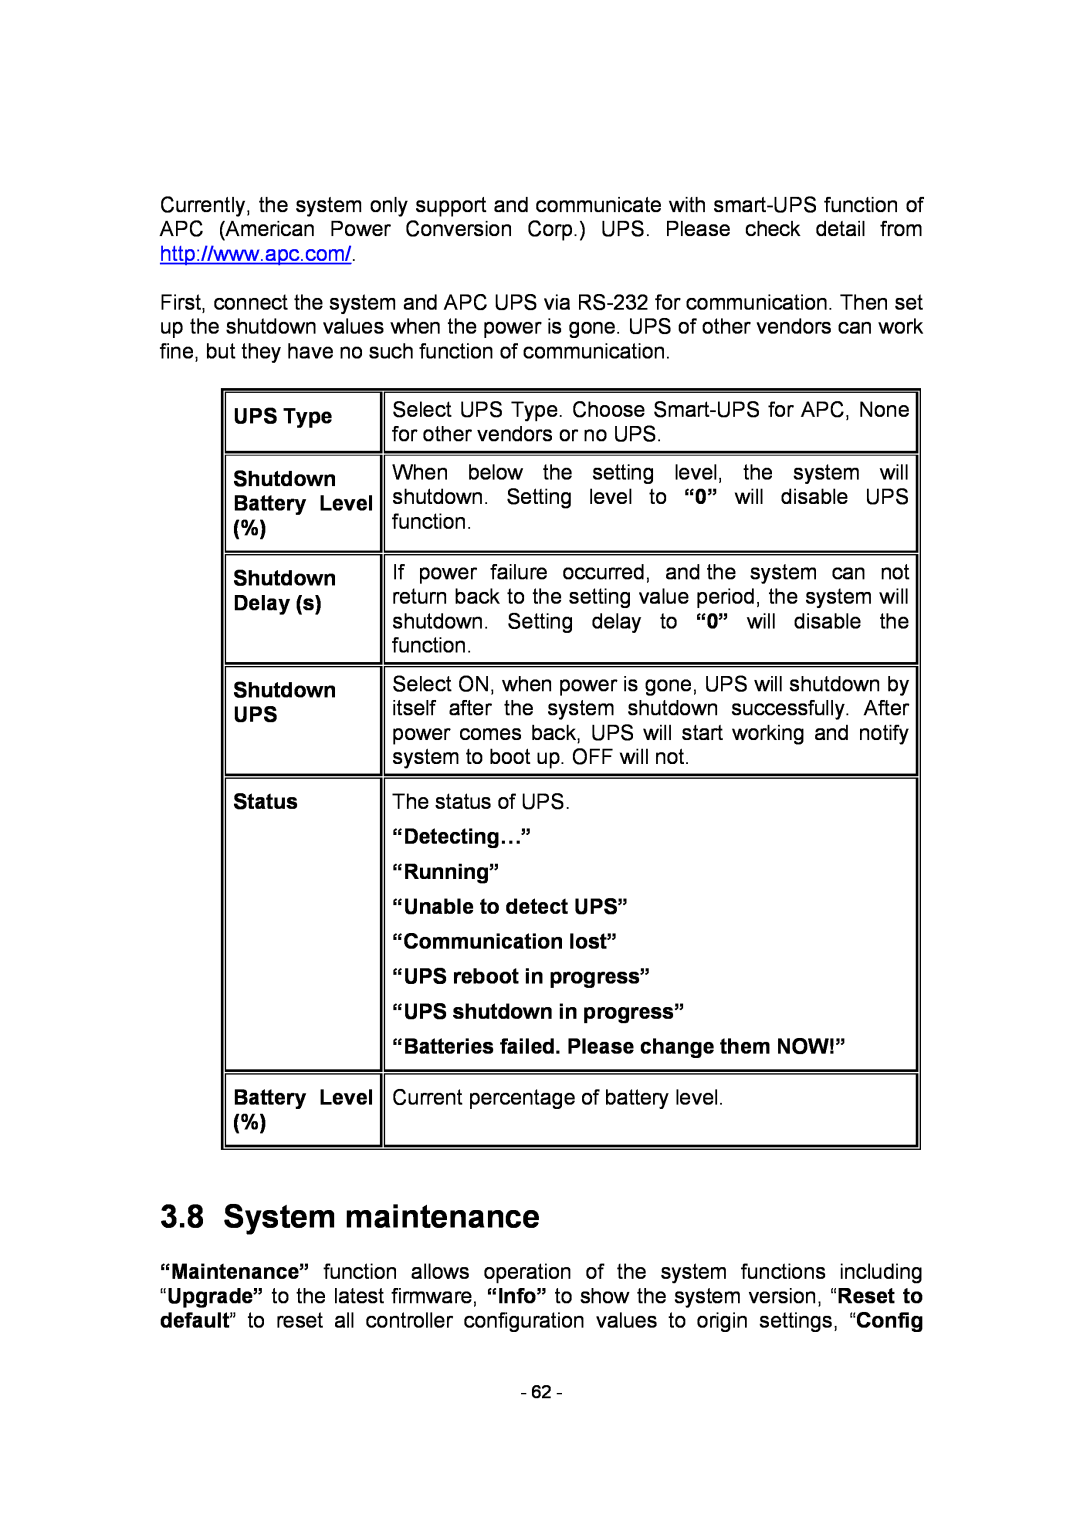 APC SCSI-SATA II manual System maintenance, UPS Type Shutdown Battery Level, Shutdown Delay s, Shutdown UPS, Status 